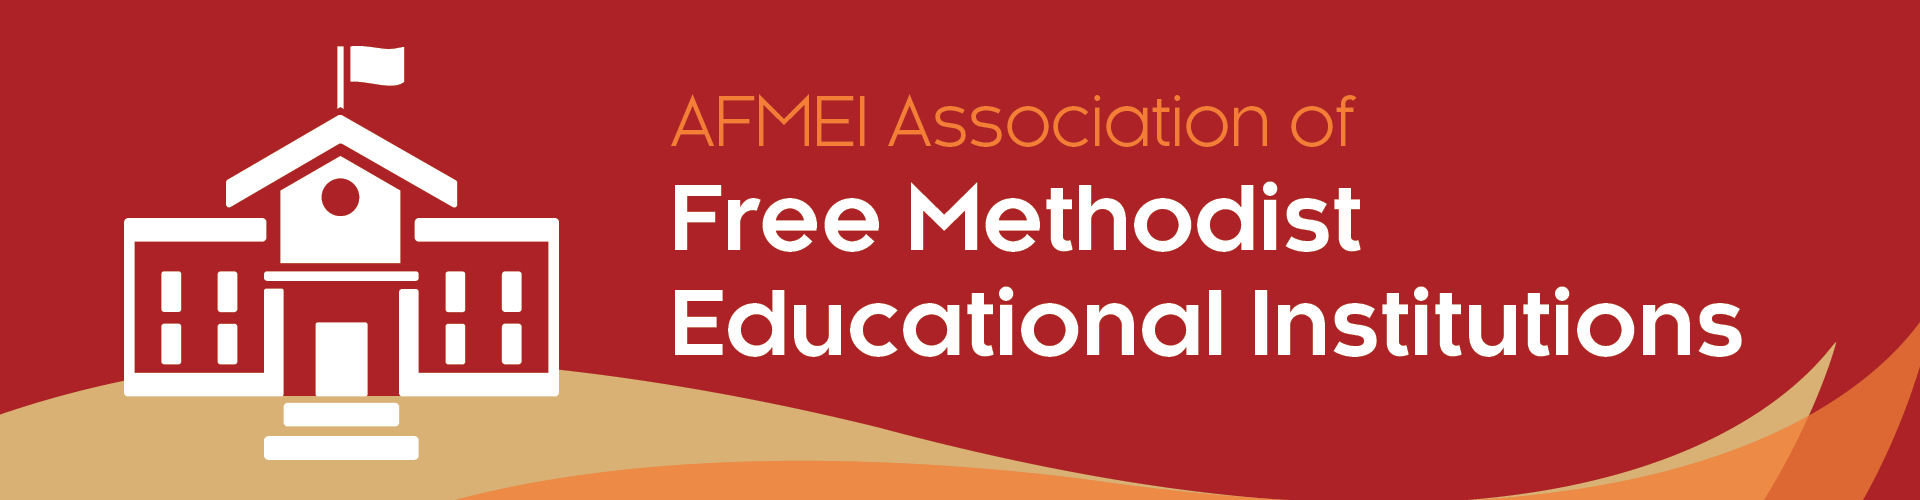 AFMEI Association of Free Methodist Educational Insitutions